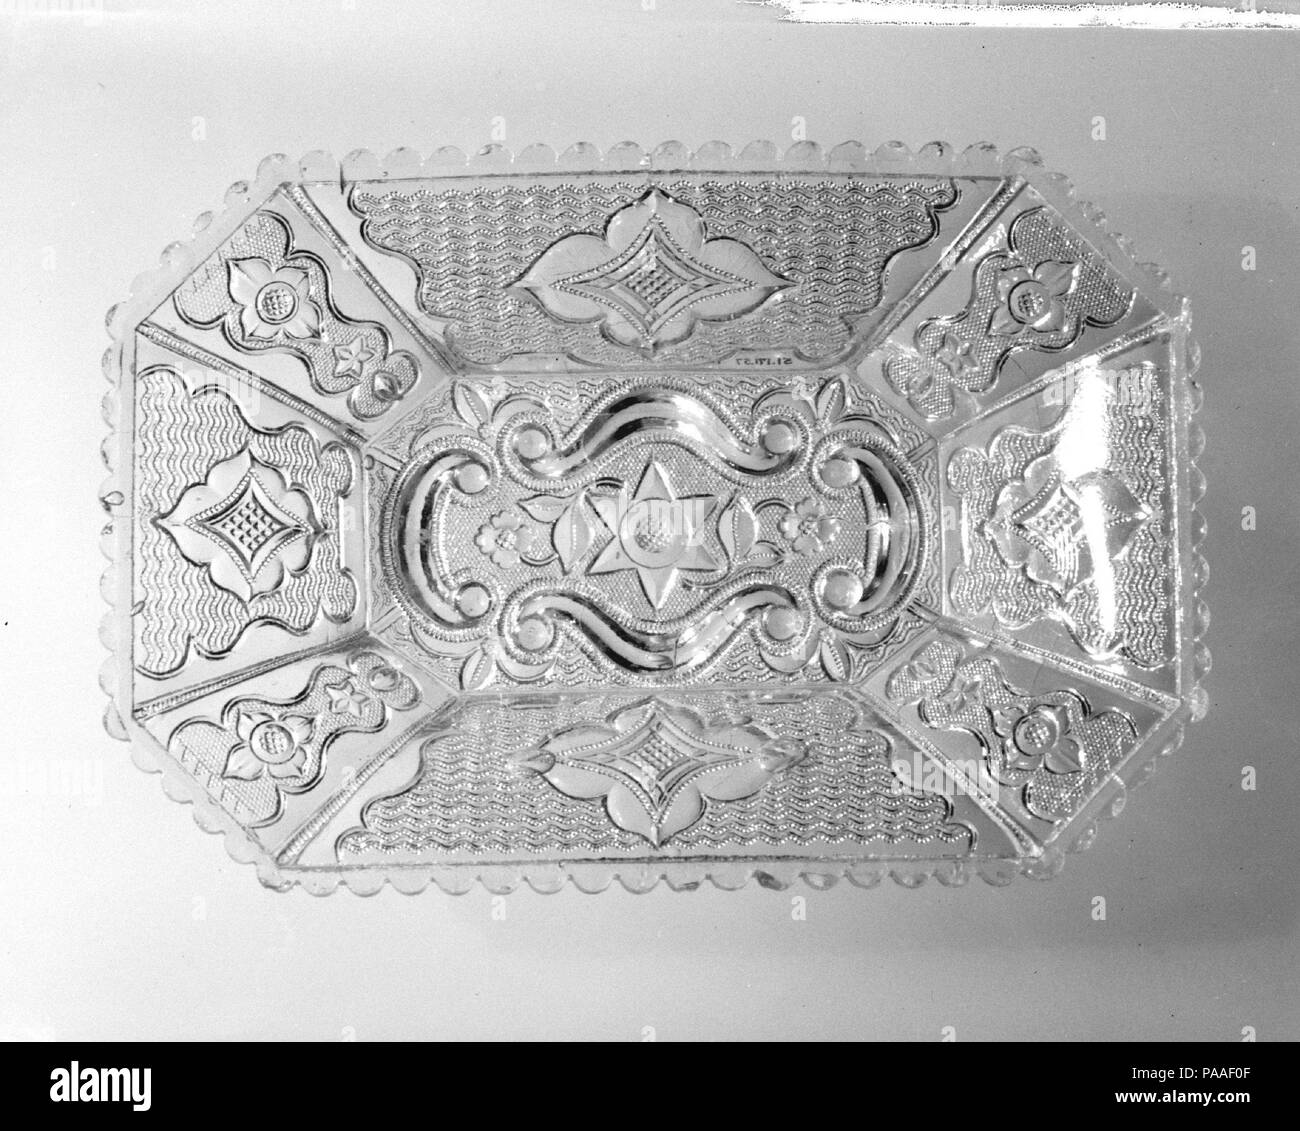 Dish. Culture: American. Dimensions: 6 1/4 x 9 1/16 in. (15.9 x 23 cm). Date: 1835-50. Museum: Metropolitan Museum of Art, New York, USA. Stock Photo